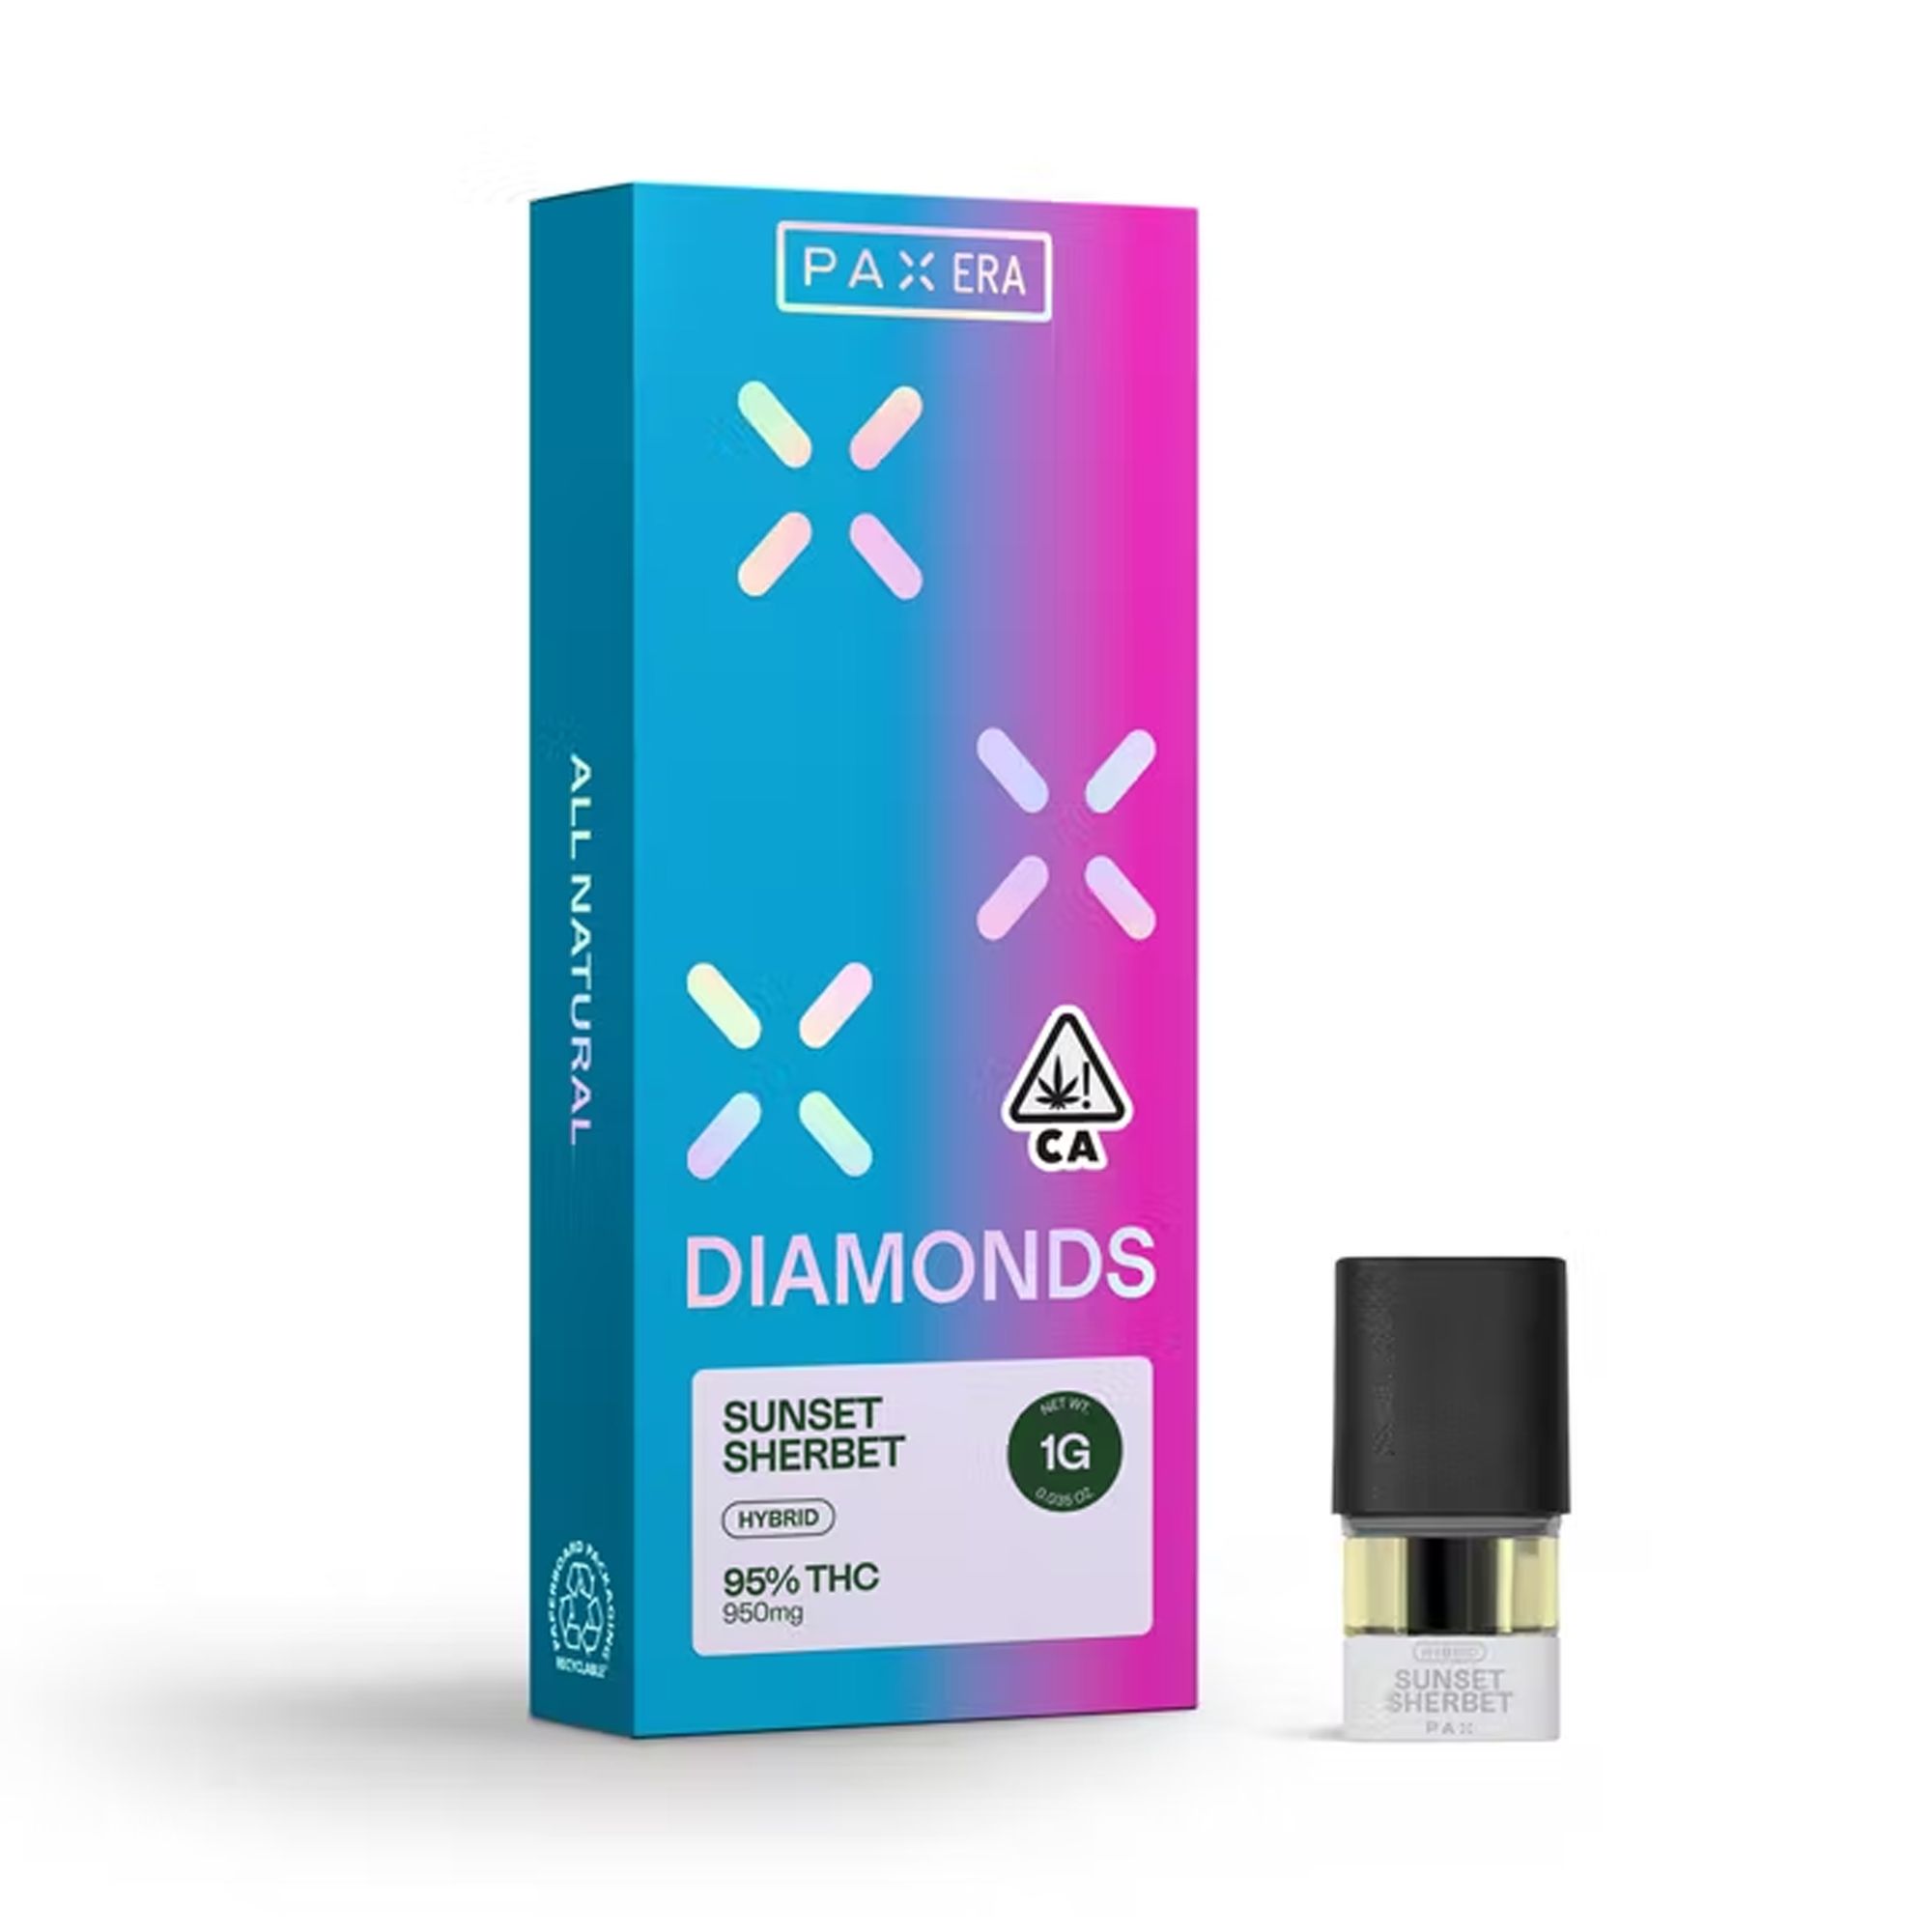 PAX Diamonds – Sunset Sherbet